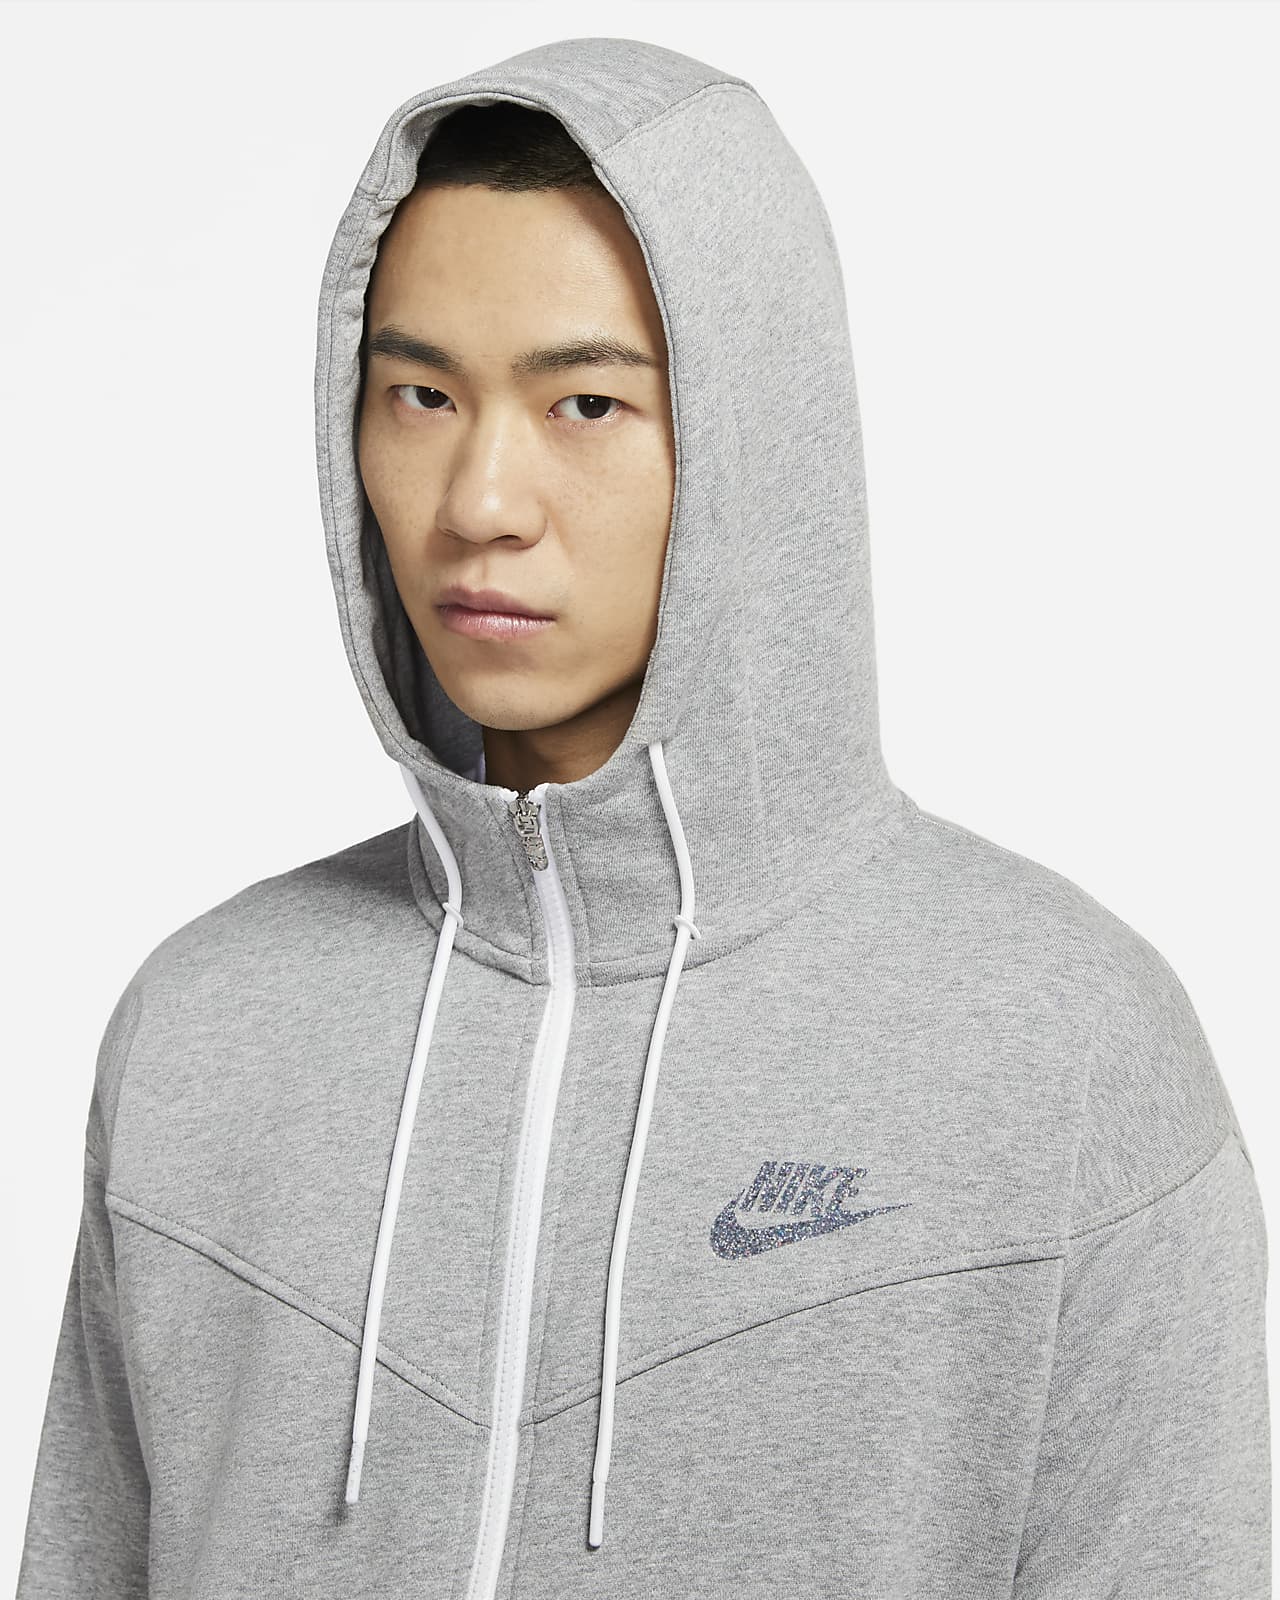 nike sportswear hoodie grey